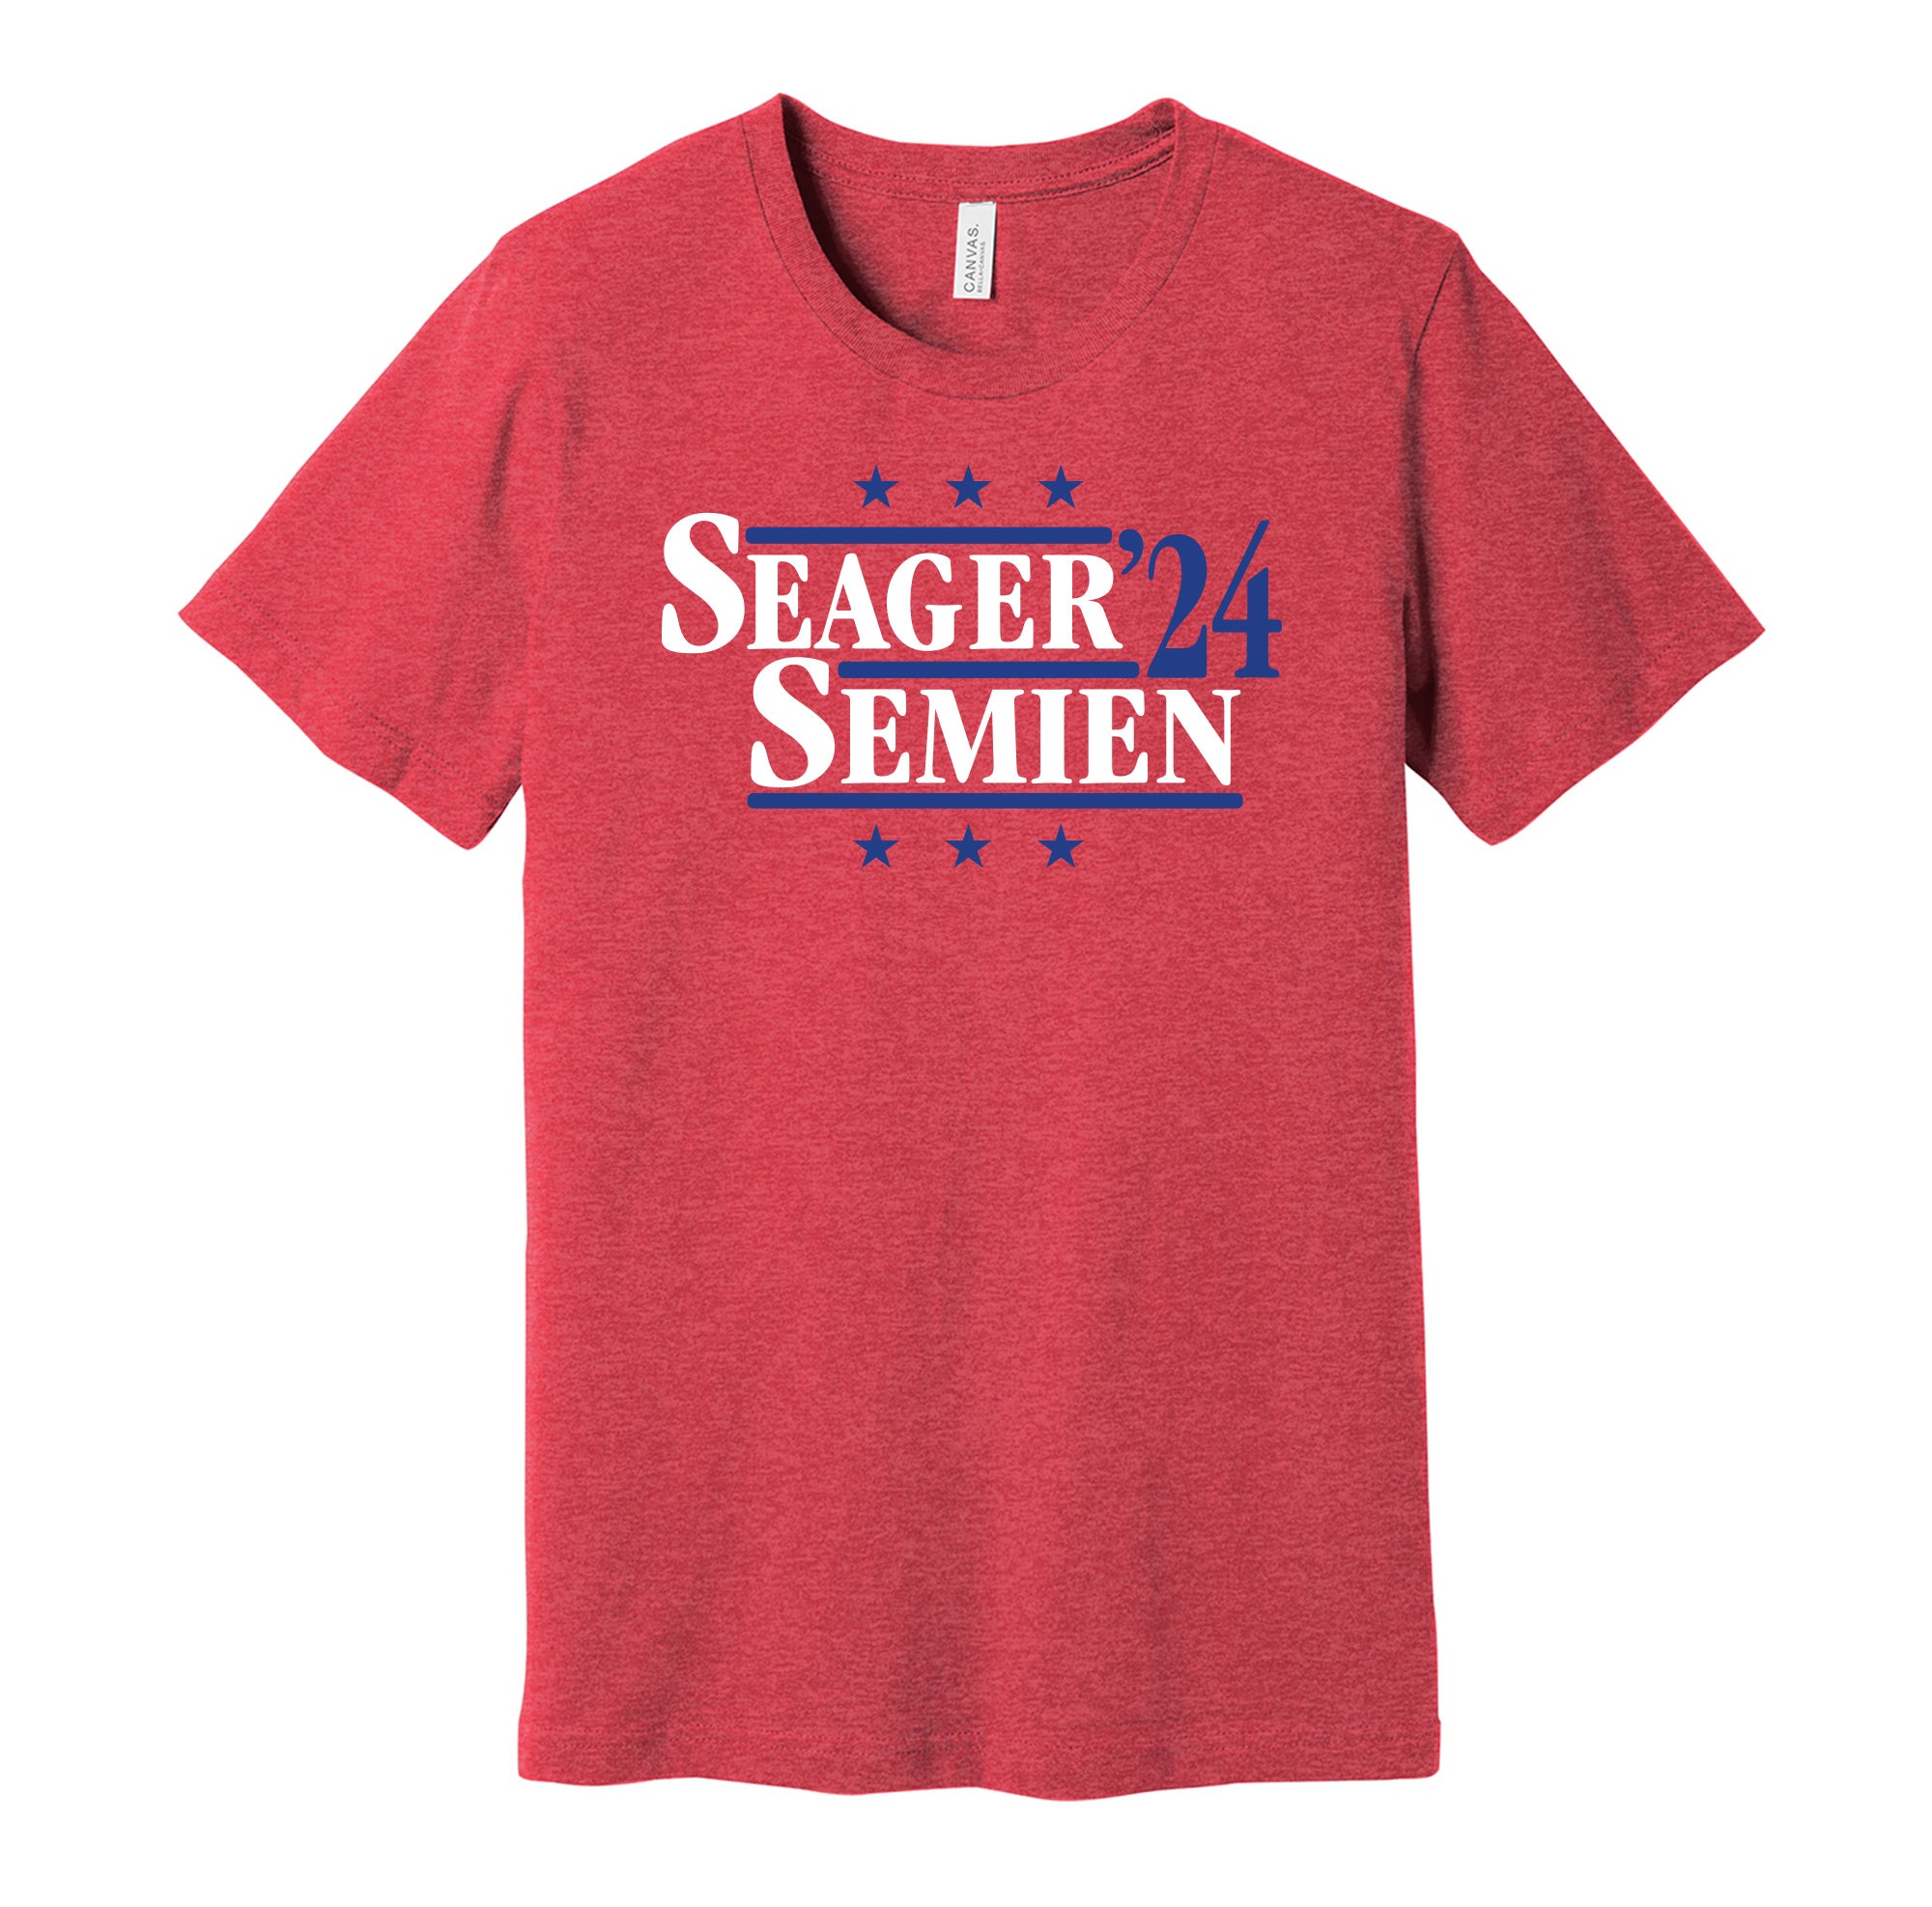 Corey Seager Baseball Tee Shirt, Texas Baseball Men's Baseball T-Shirt